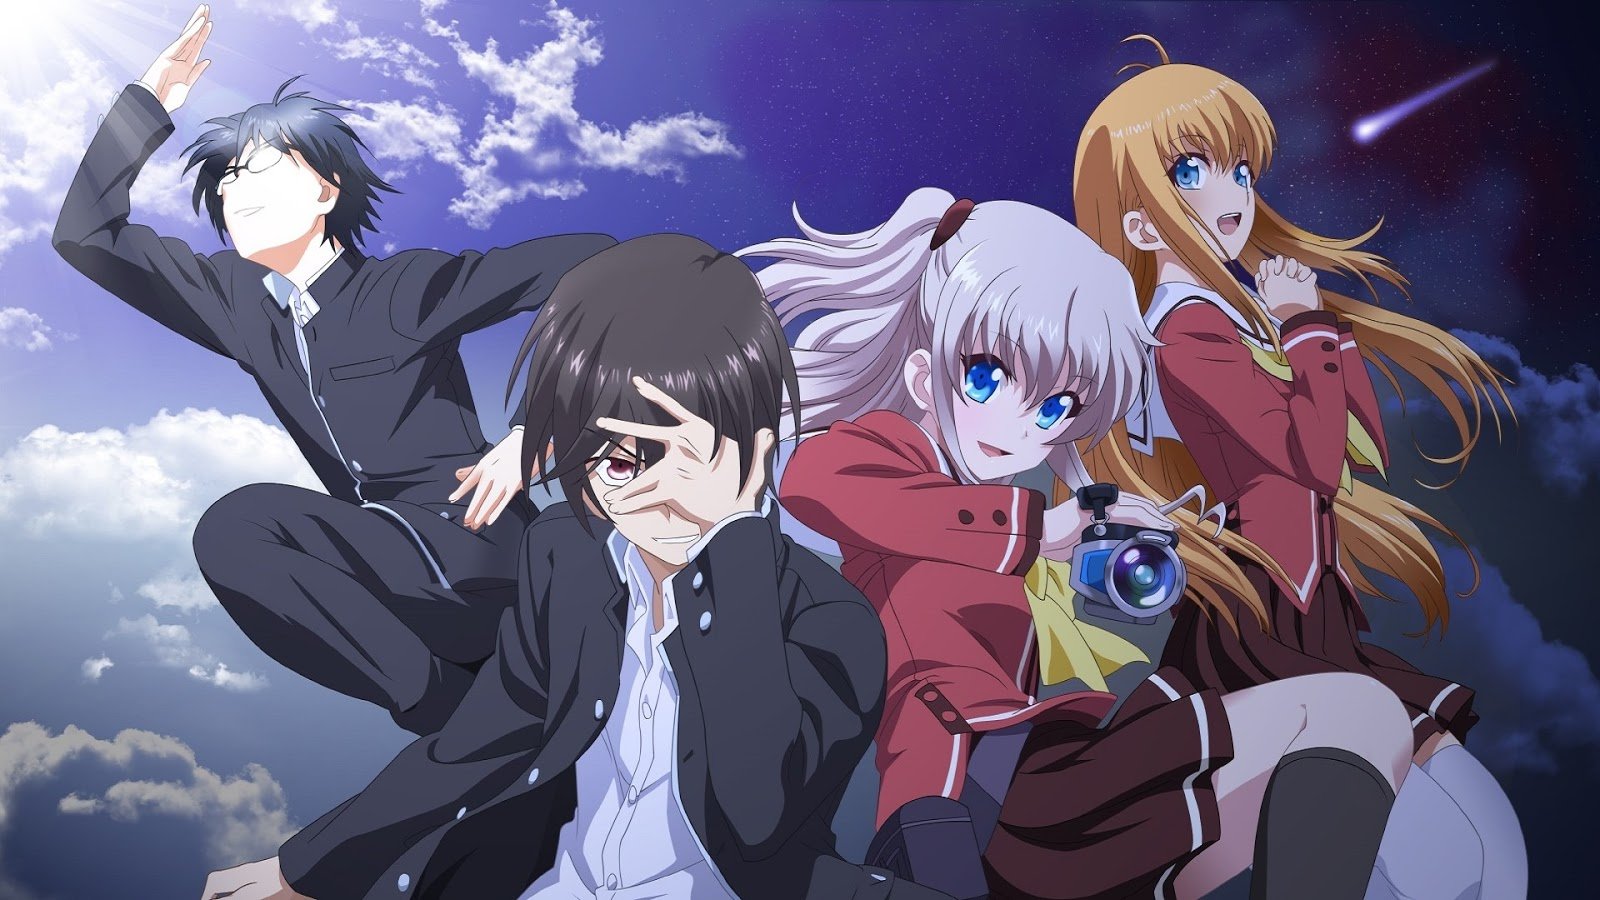 animesnovos #otakus #animeedit #anime #animenovo #manga #animes